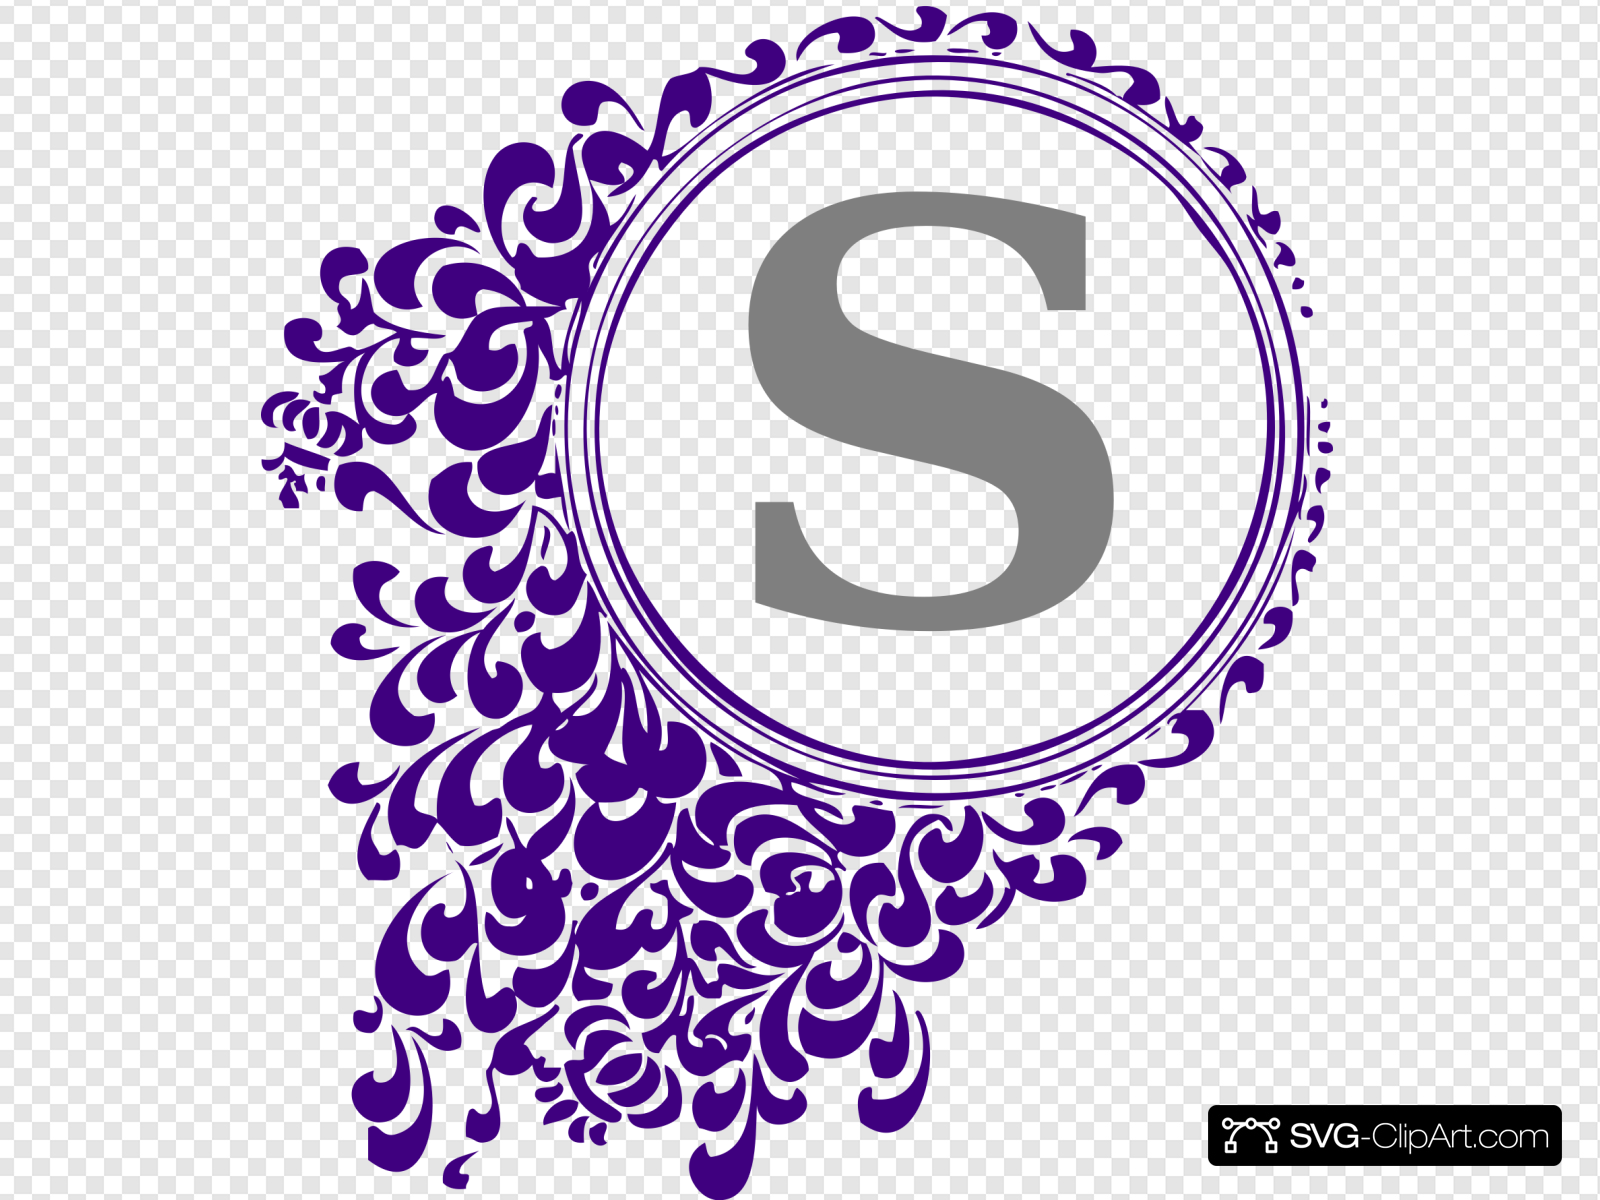 Purple Vintage Clip art, Icon and SVG.